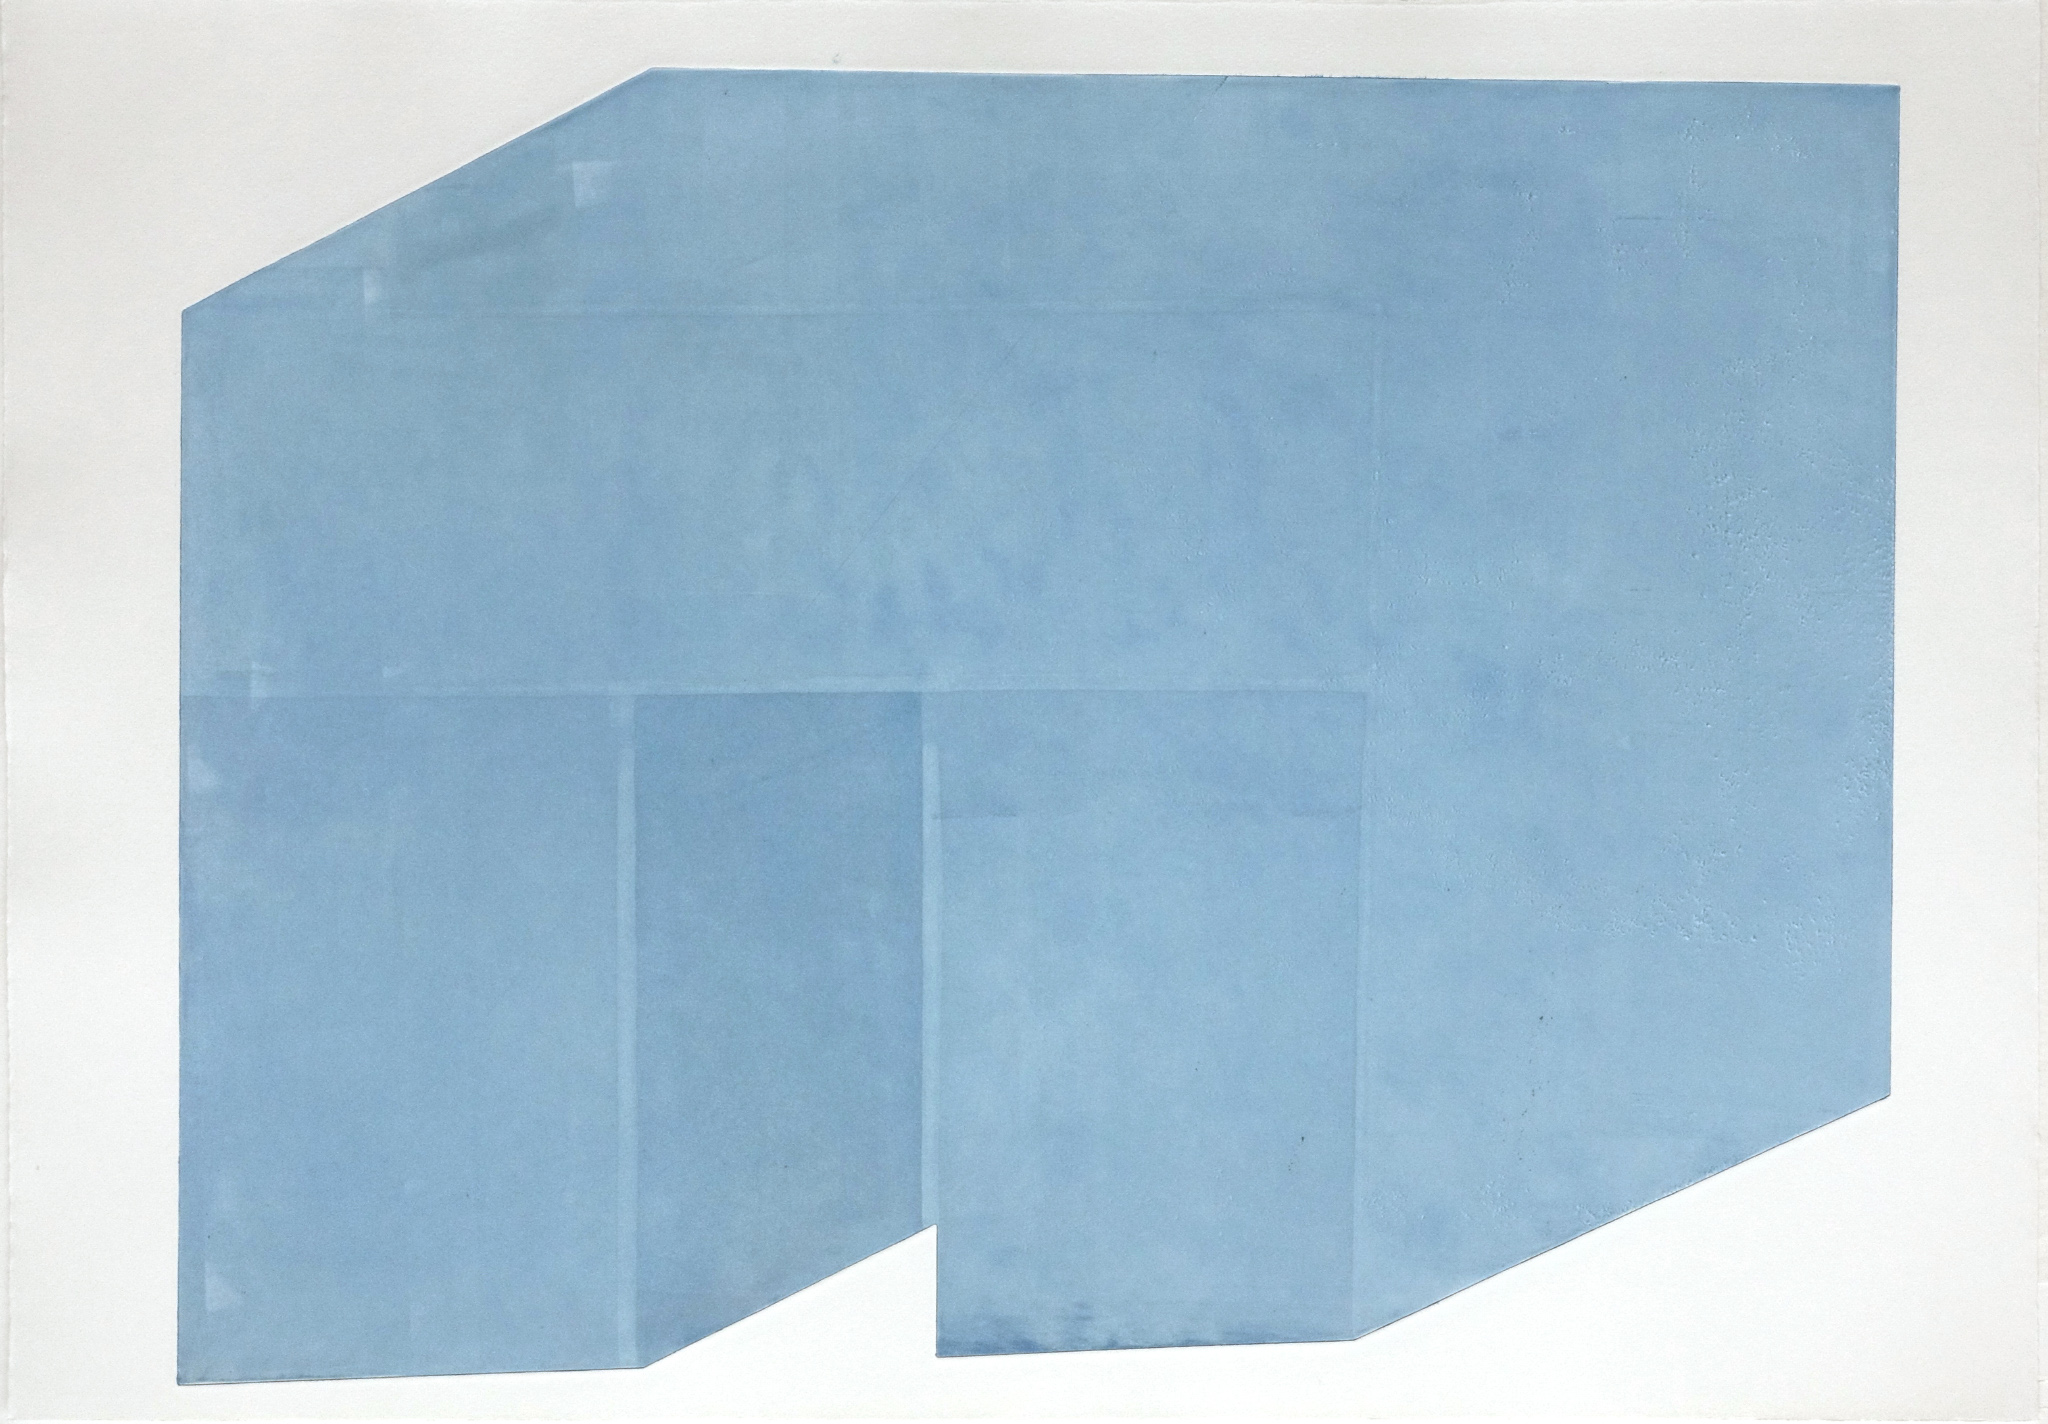 cubo blu, 2020, aquatinta, 60 x 40 cm